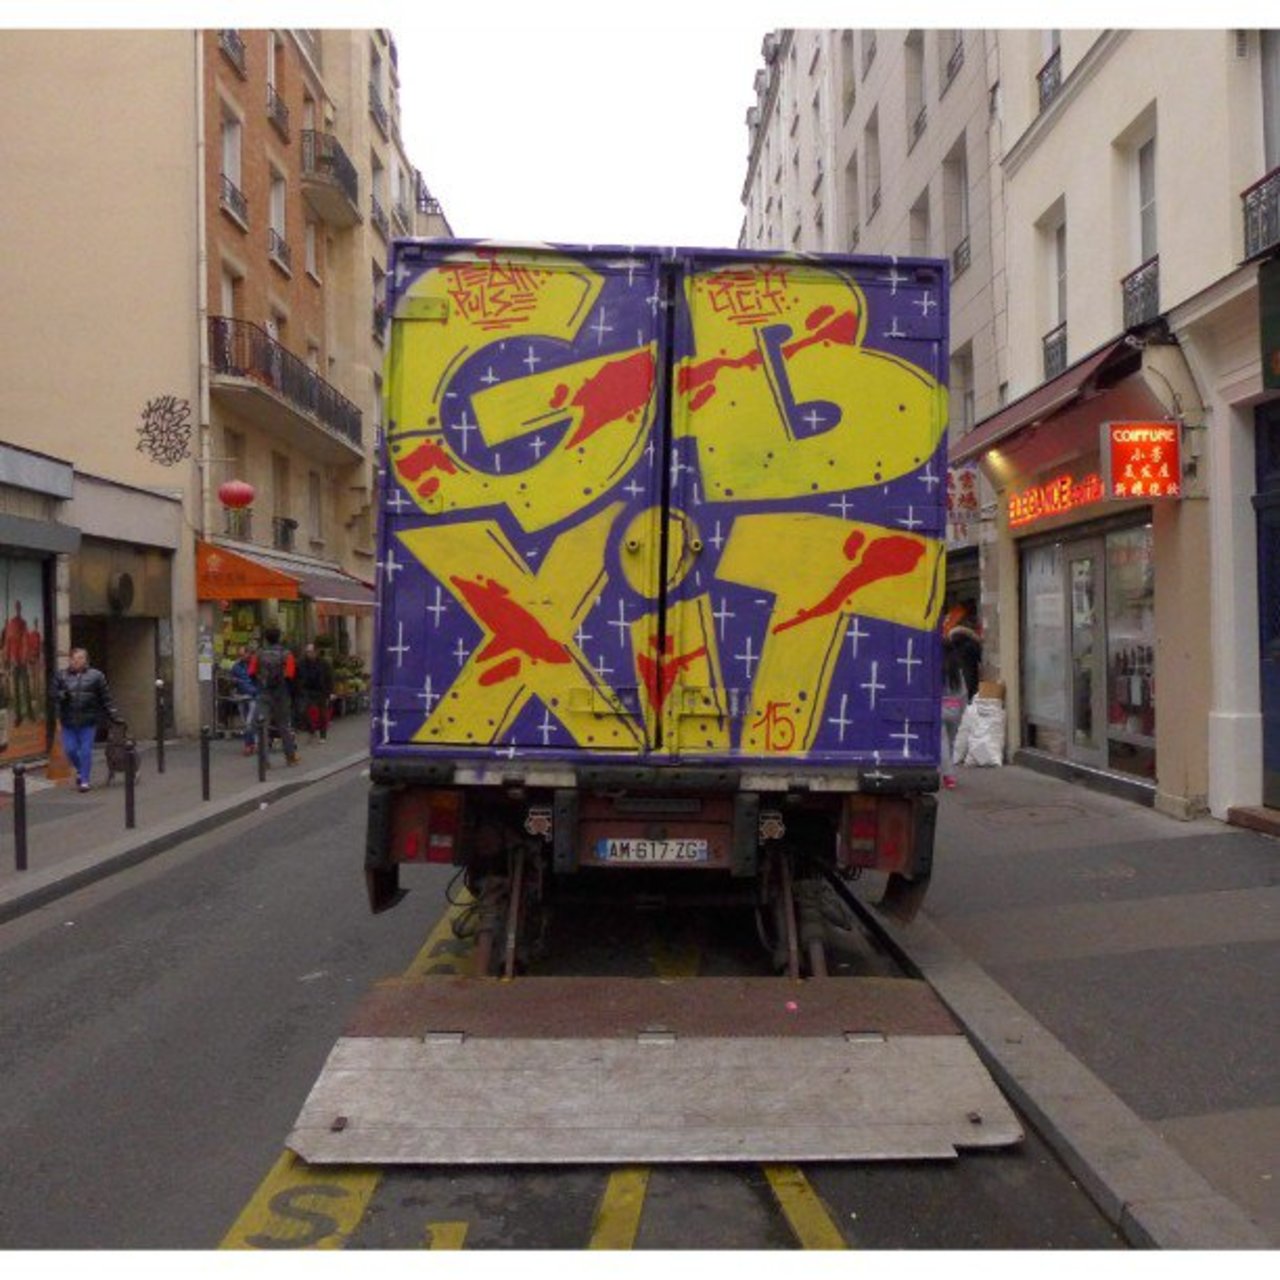 #Paris #graffiti photo by @maxdimontemarciano http://ift.tt/1KnKXDM #StreetArt https://t.co/xDwyAYztn8